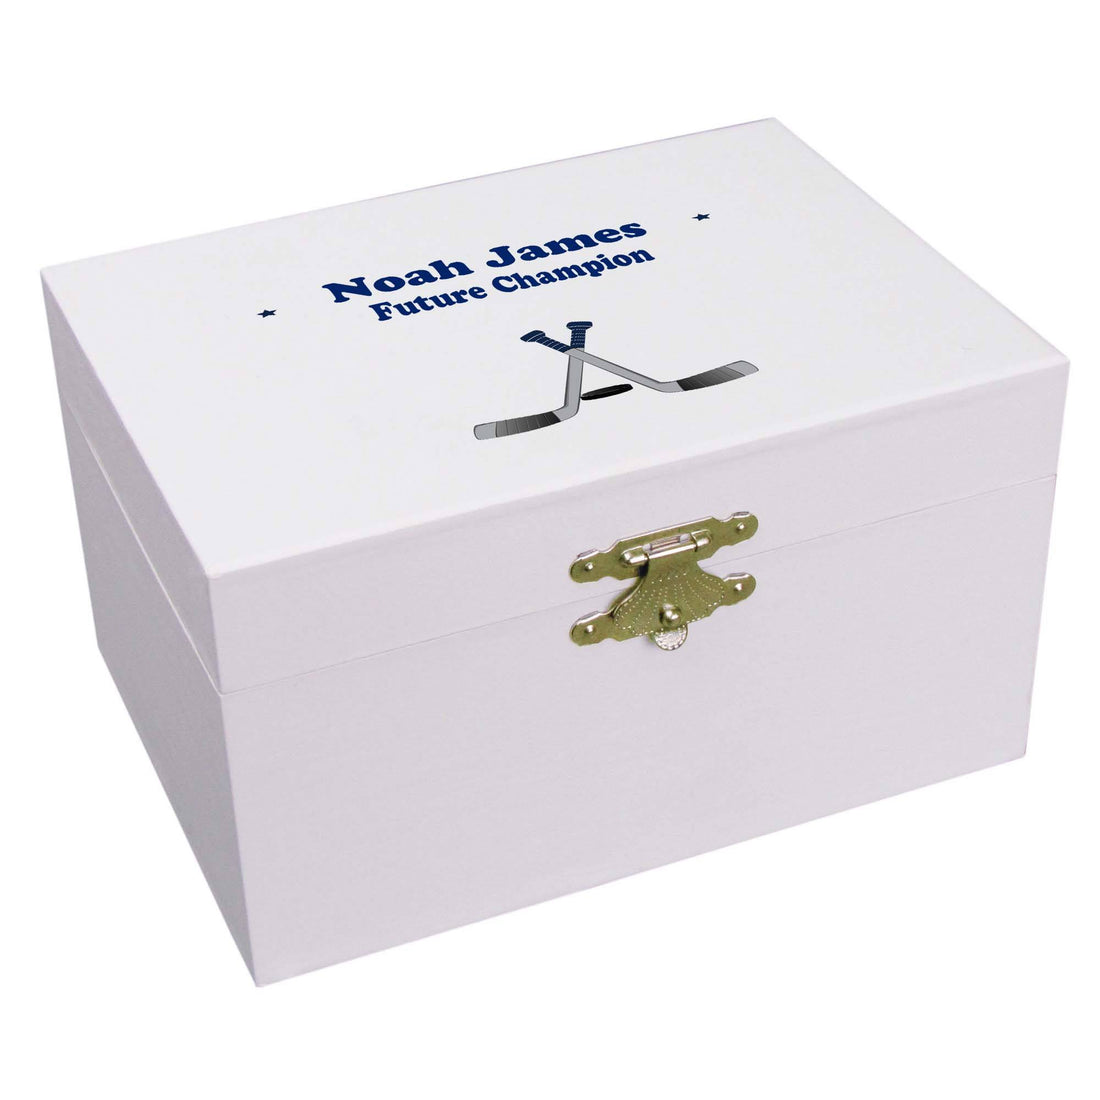 Personalized Ballerina Jewelry Box with Ice Hockey design